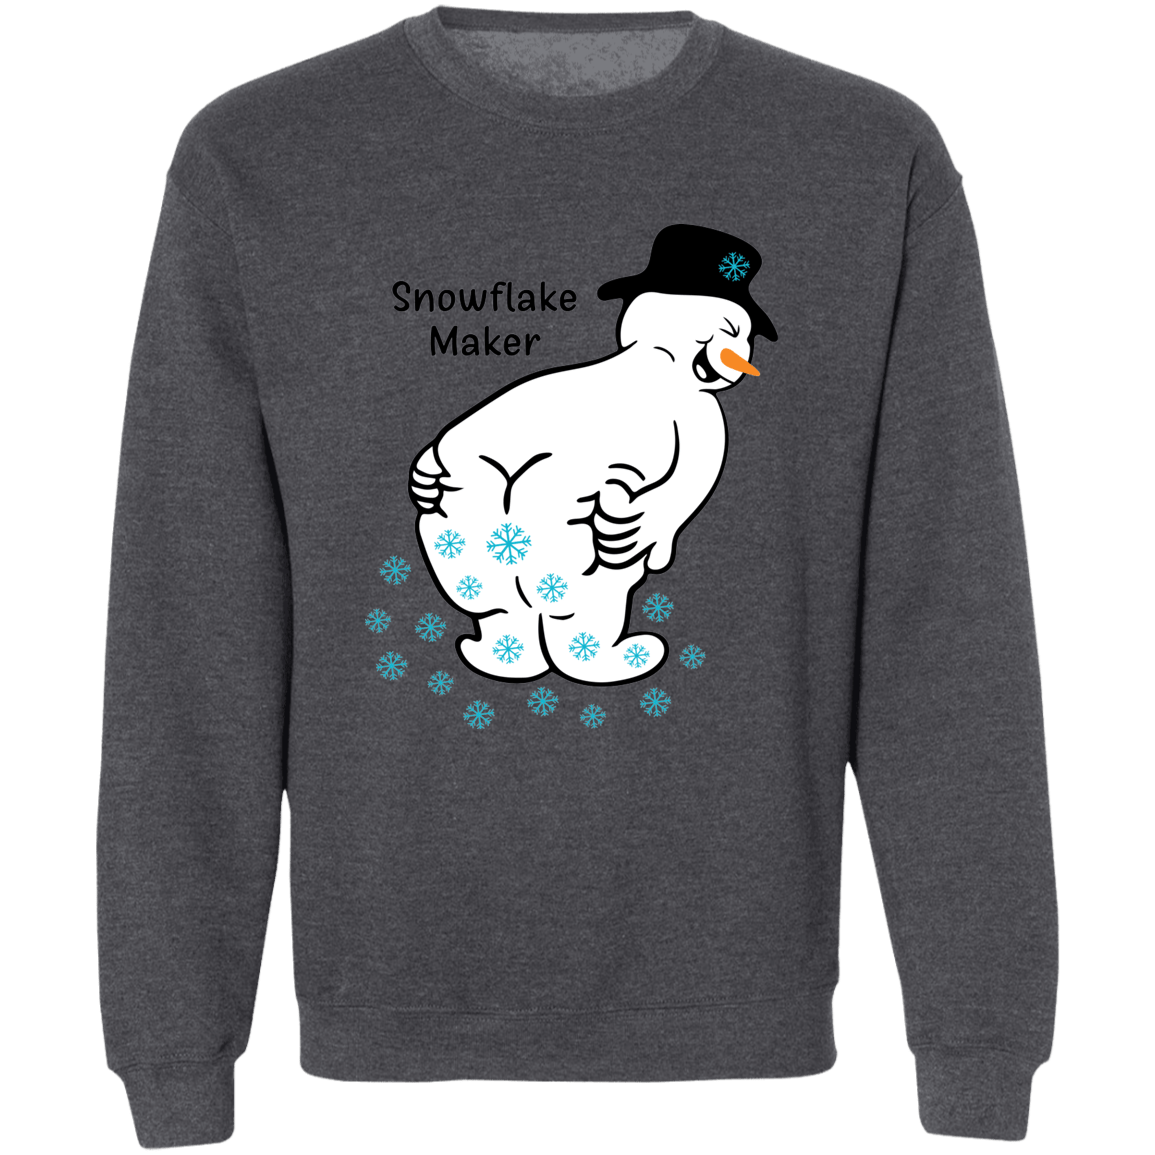 Snowflake Maker Sweatshirt